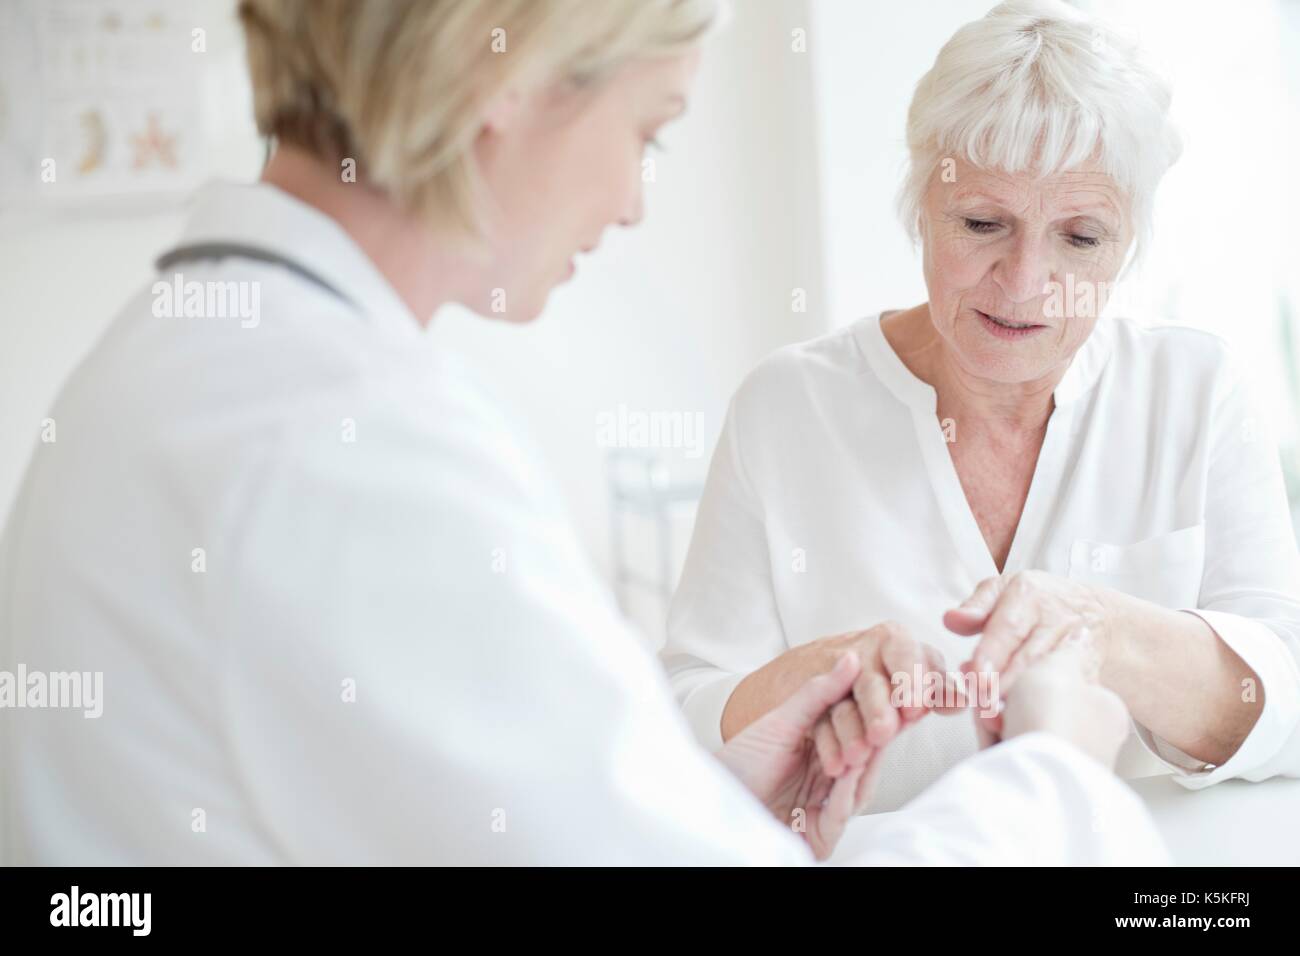 Female doctor examining senior patient's hand. Stock Photo